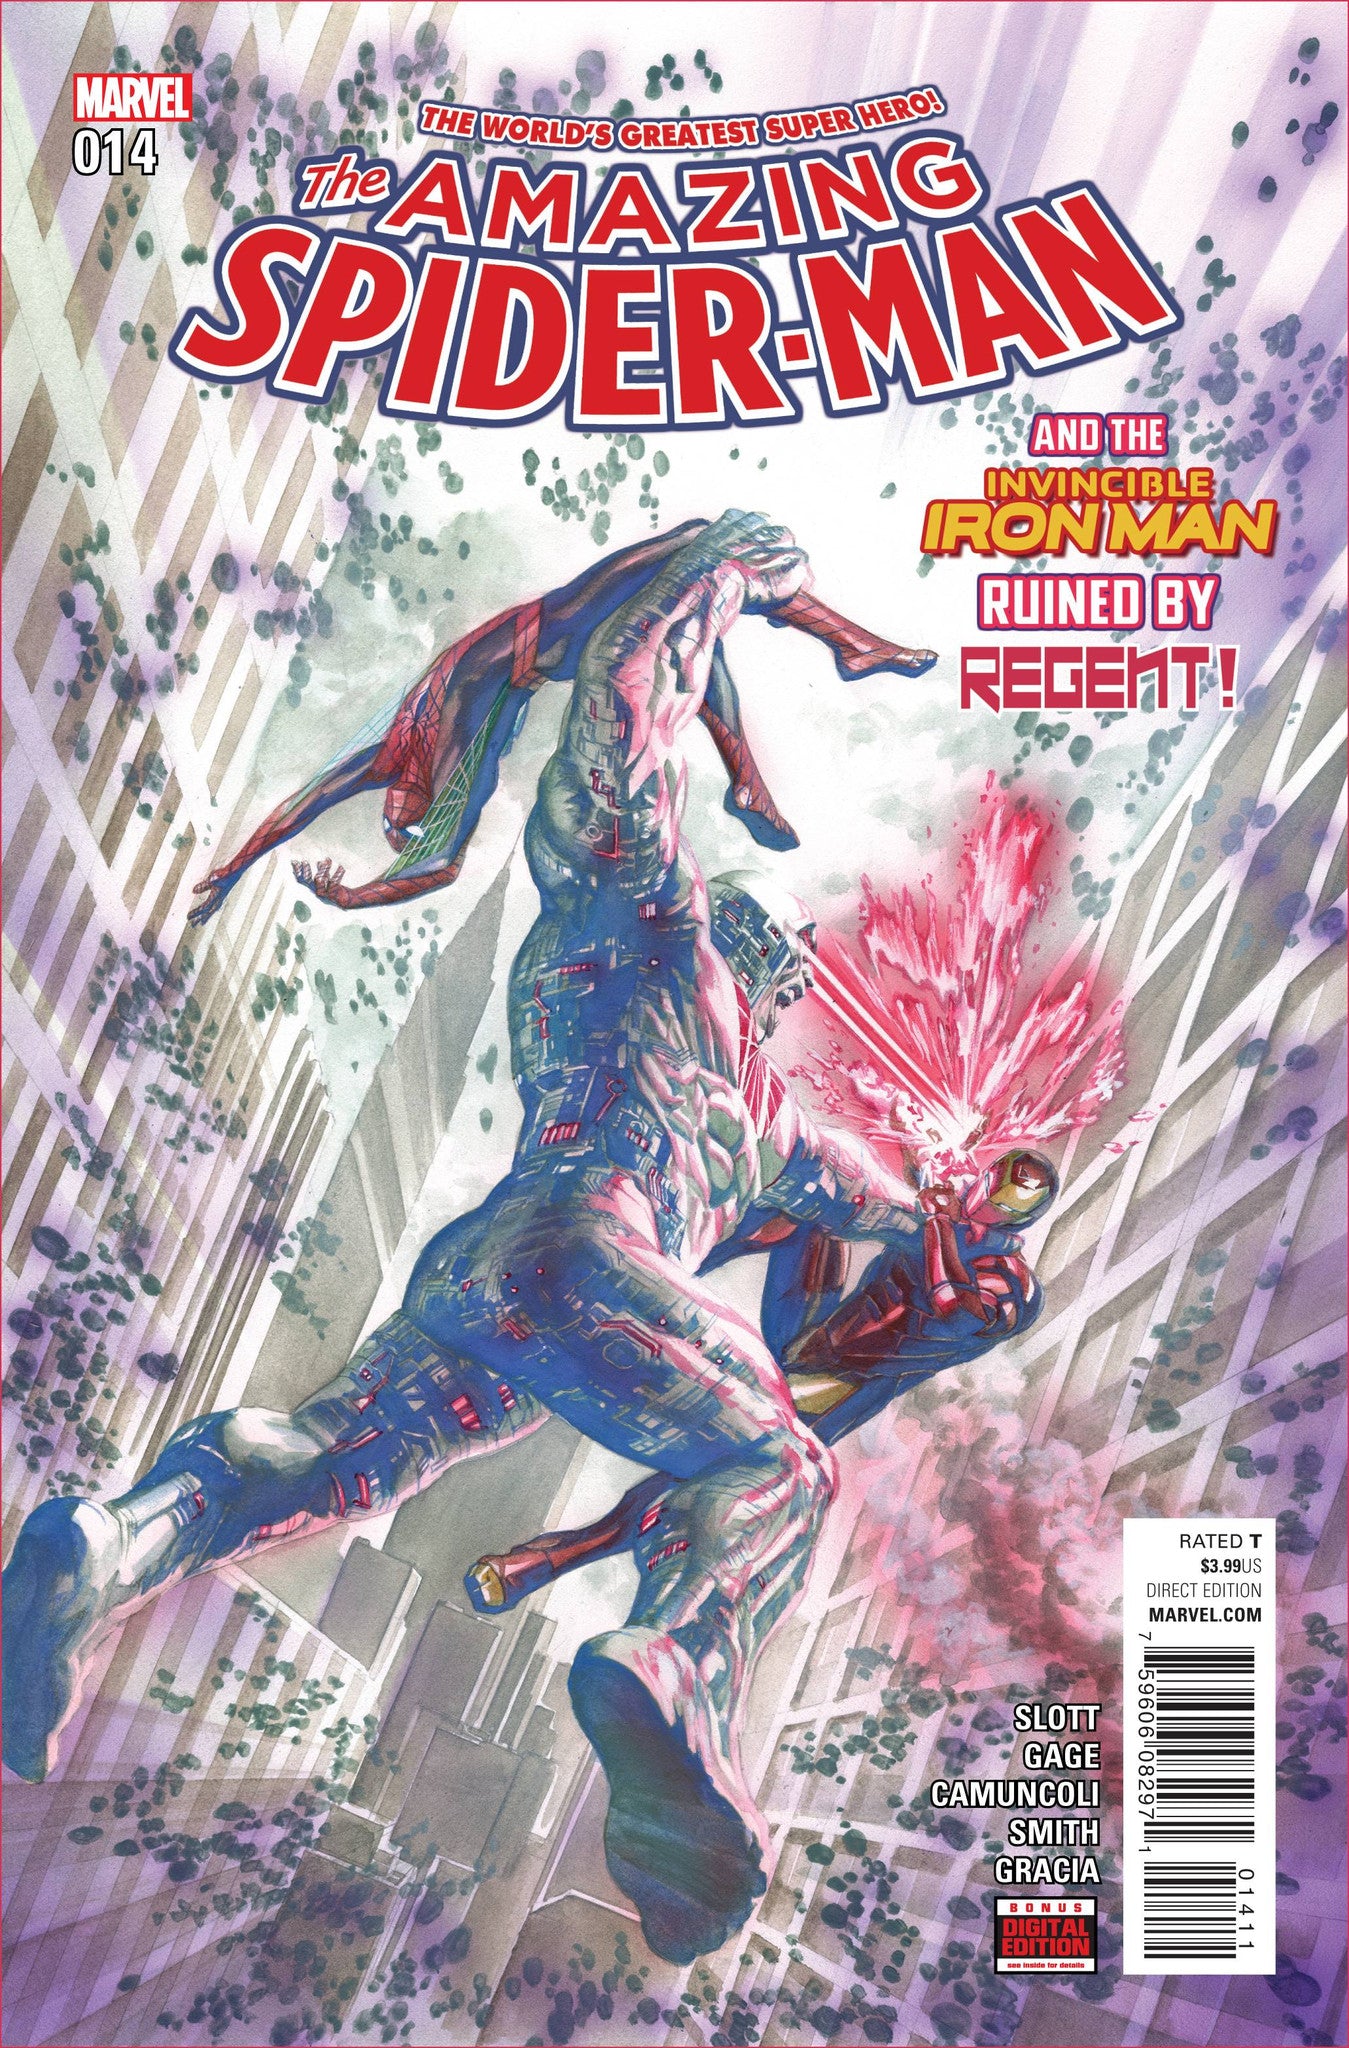 AMAZING SPIDER-MAN #14 COVER